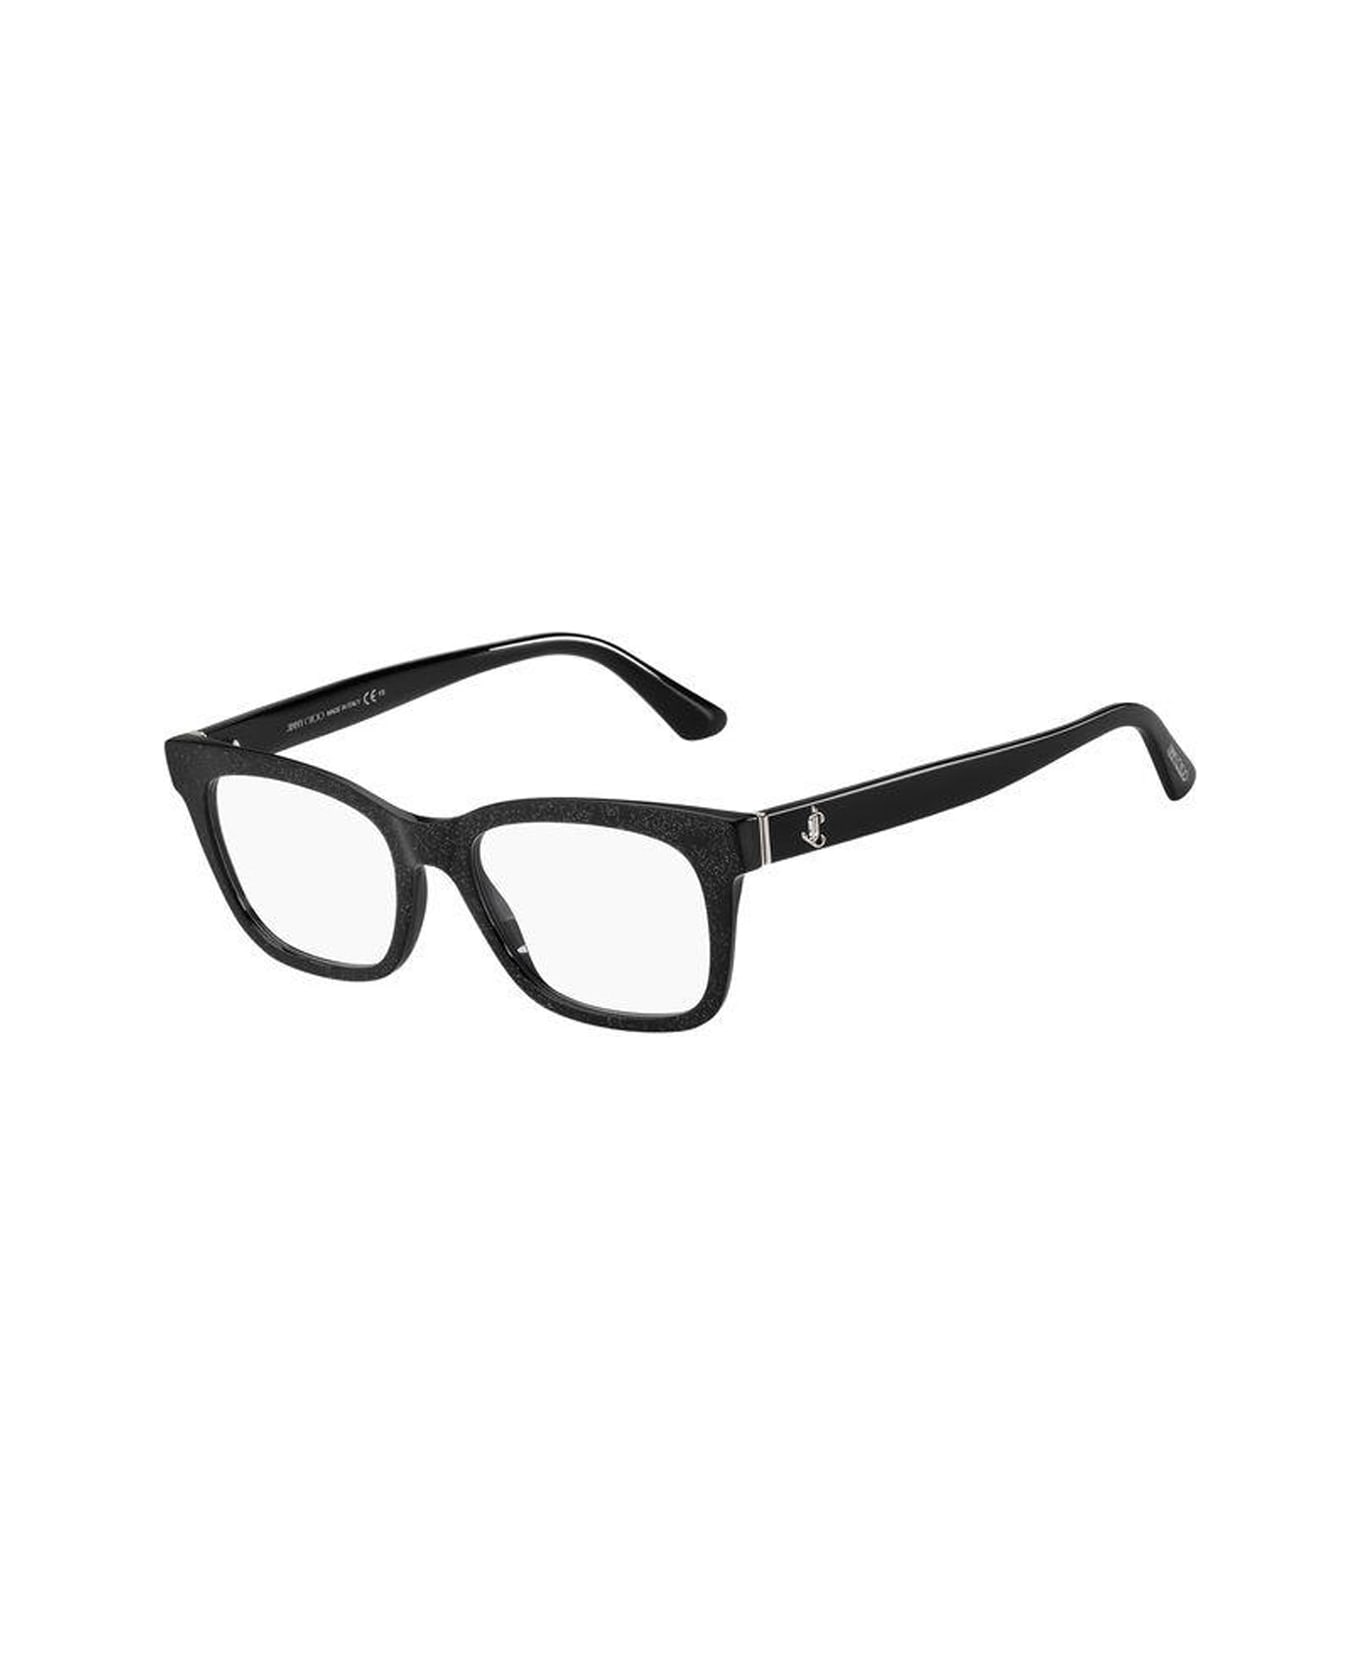 Jimmy Choo Eyewear Jc277 Glasses - Nero